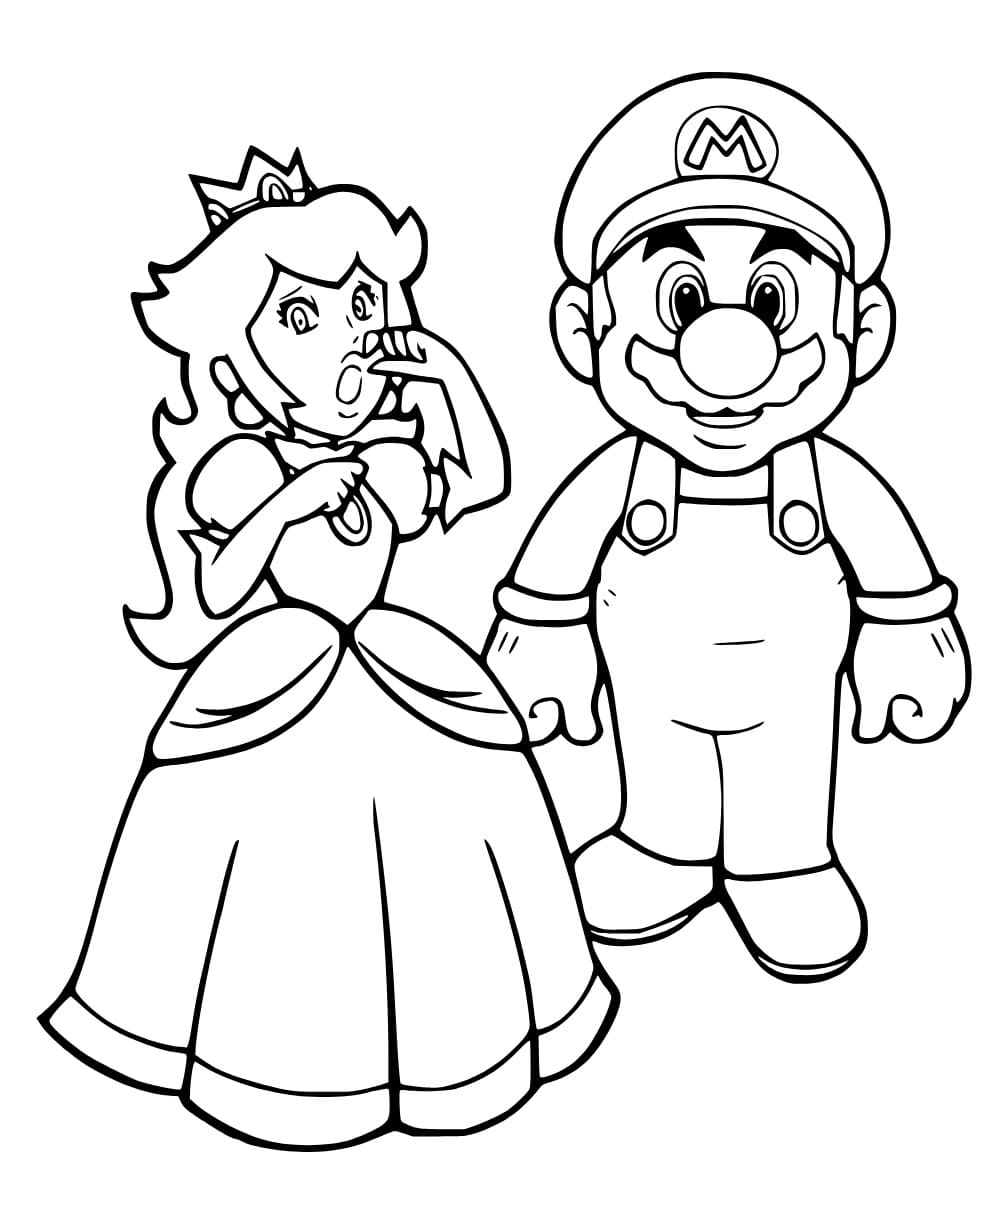 Princess peach and mario coloring page